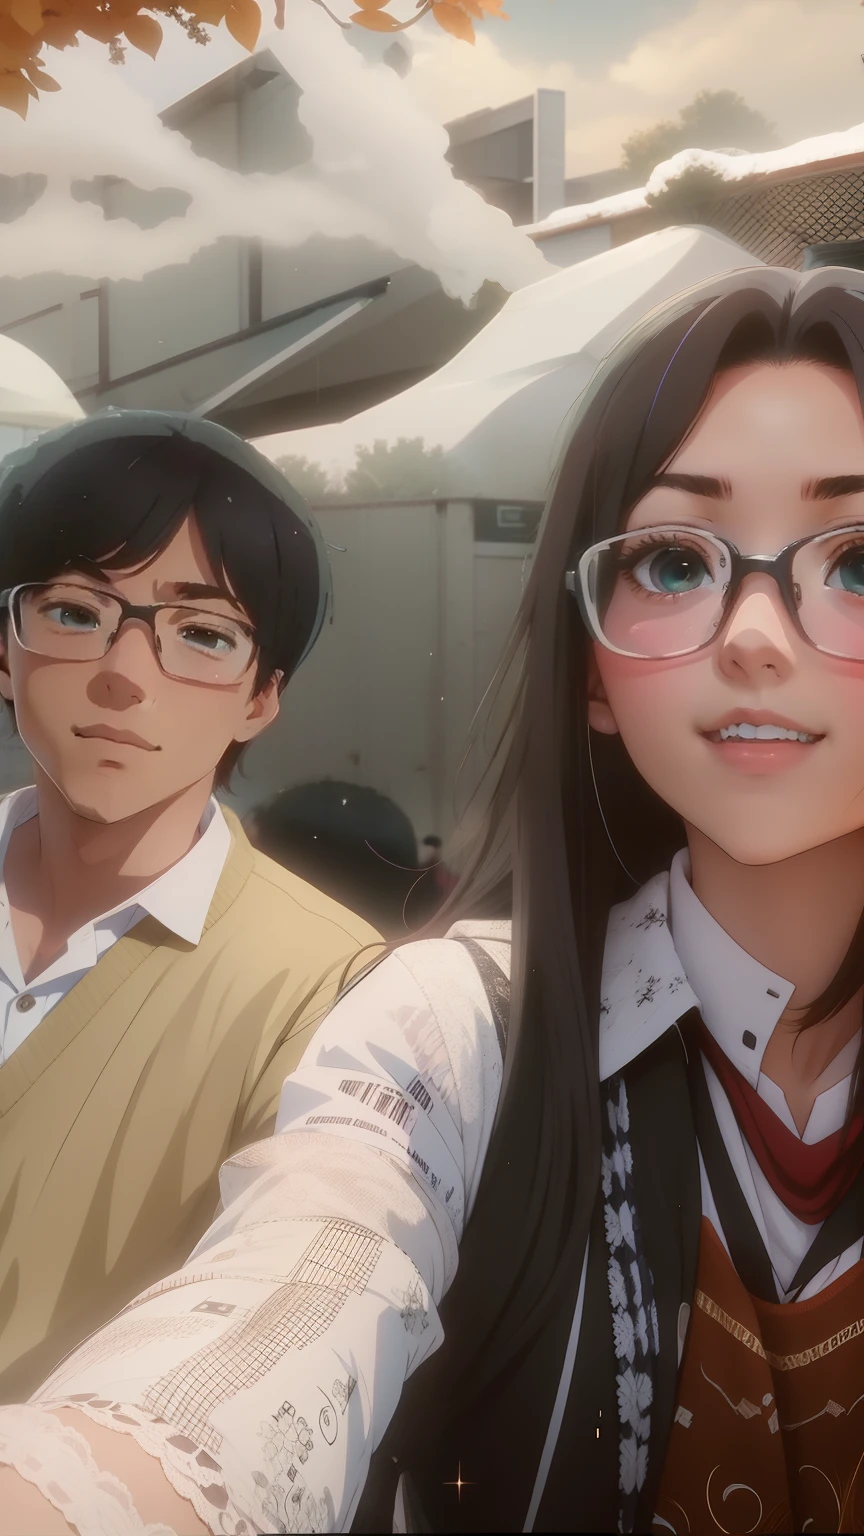 Anime-Serie, süßes Pärchen, Highschool-Paar, 18 Jahre alt